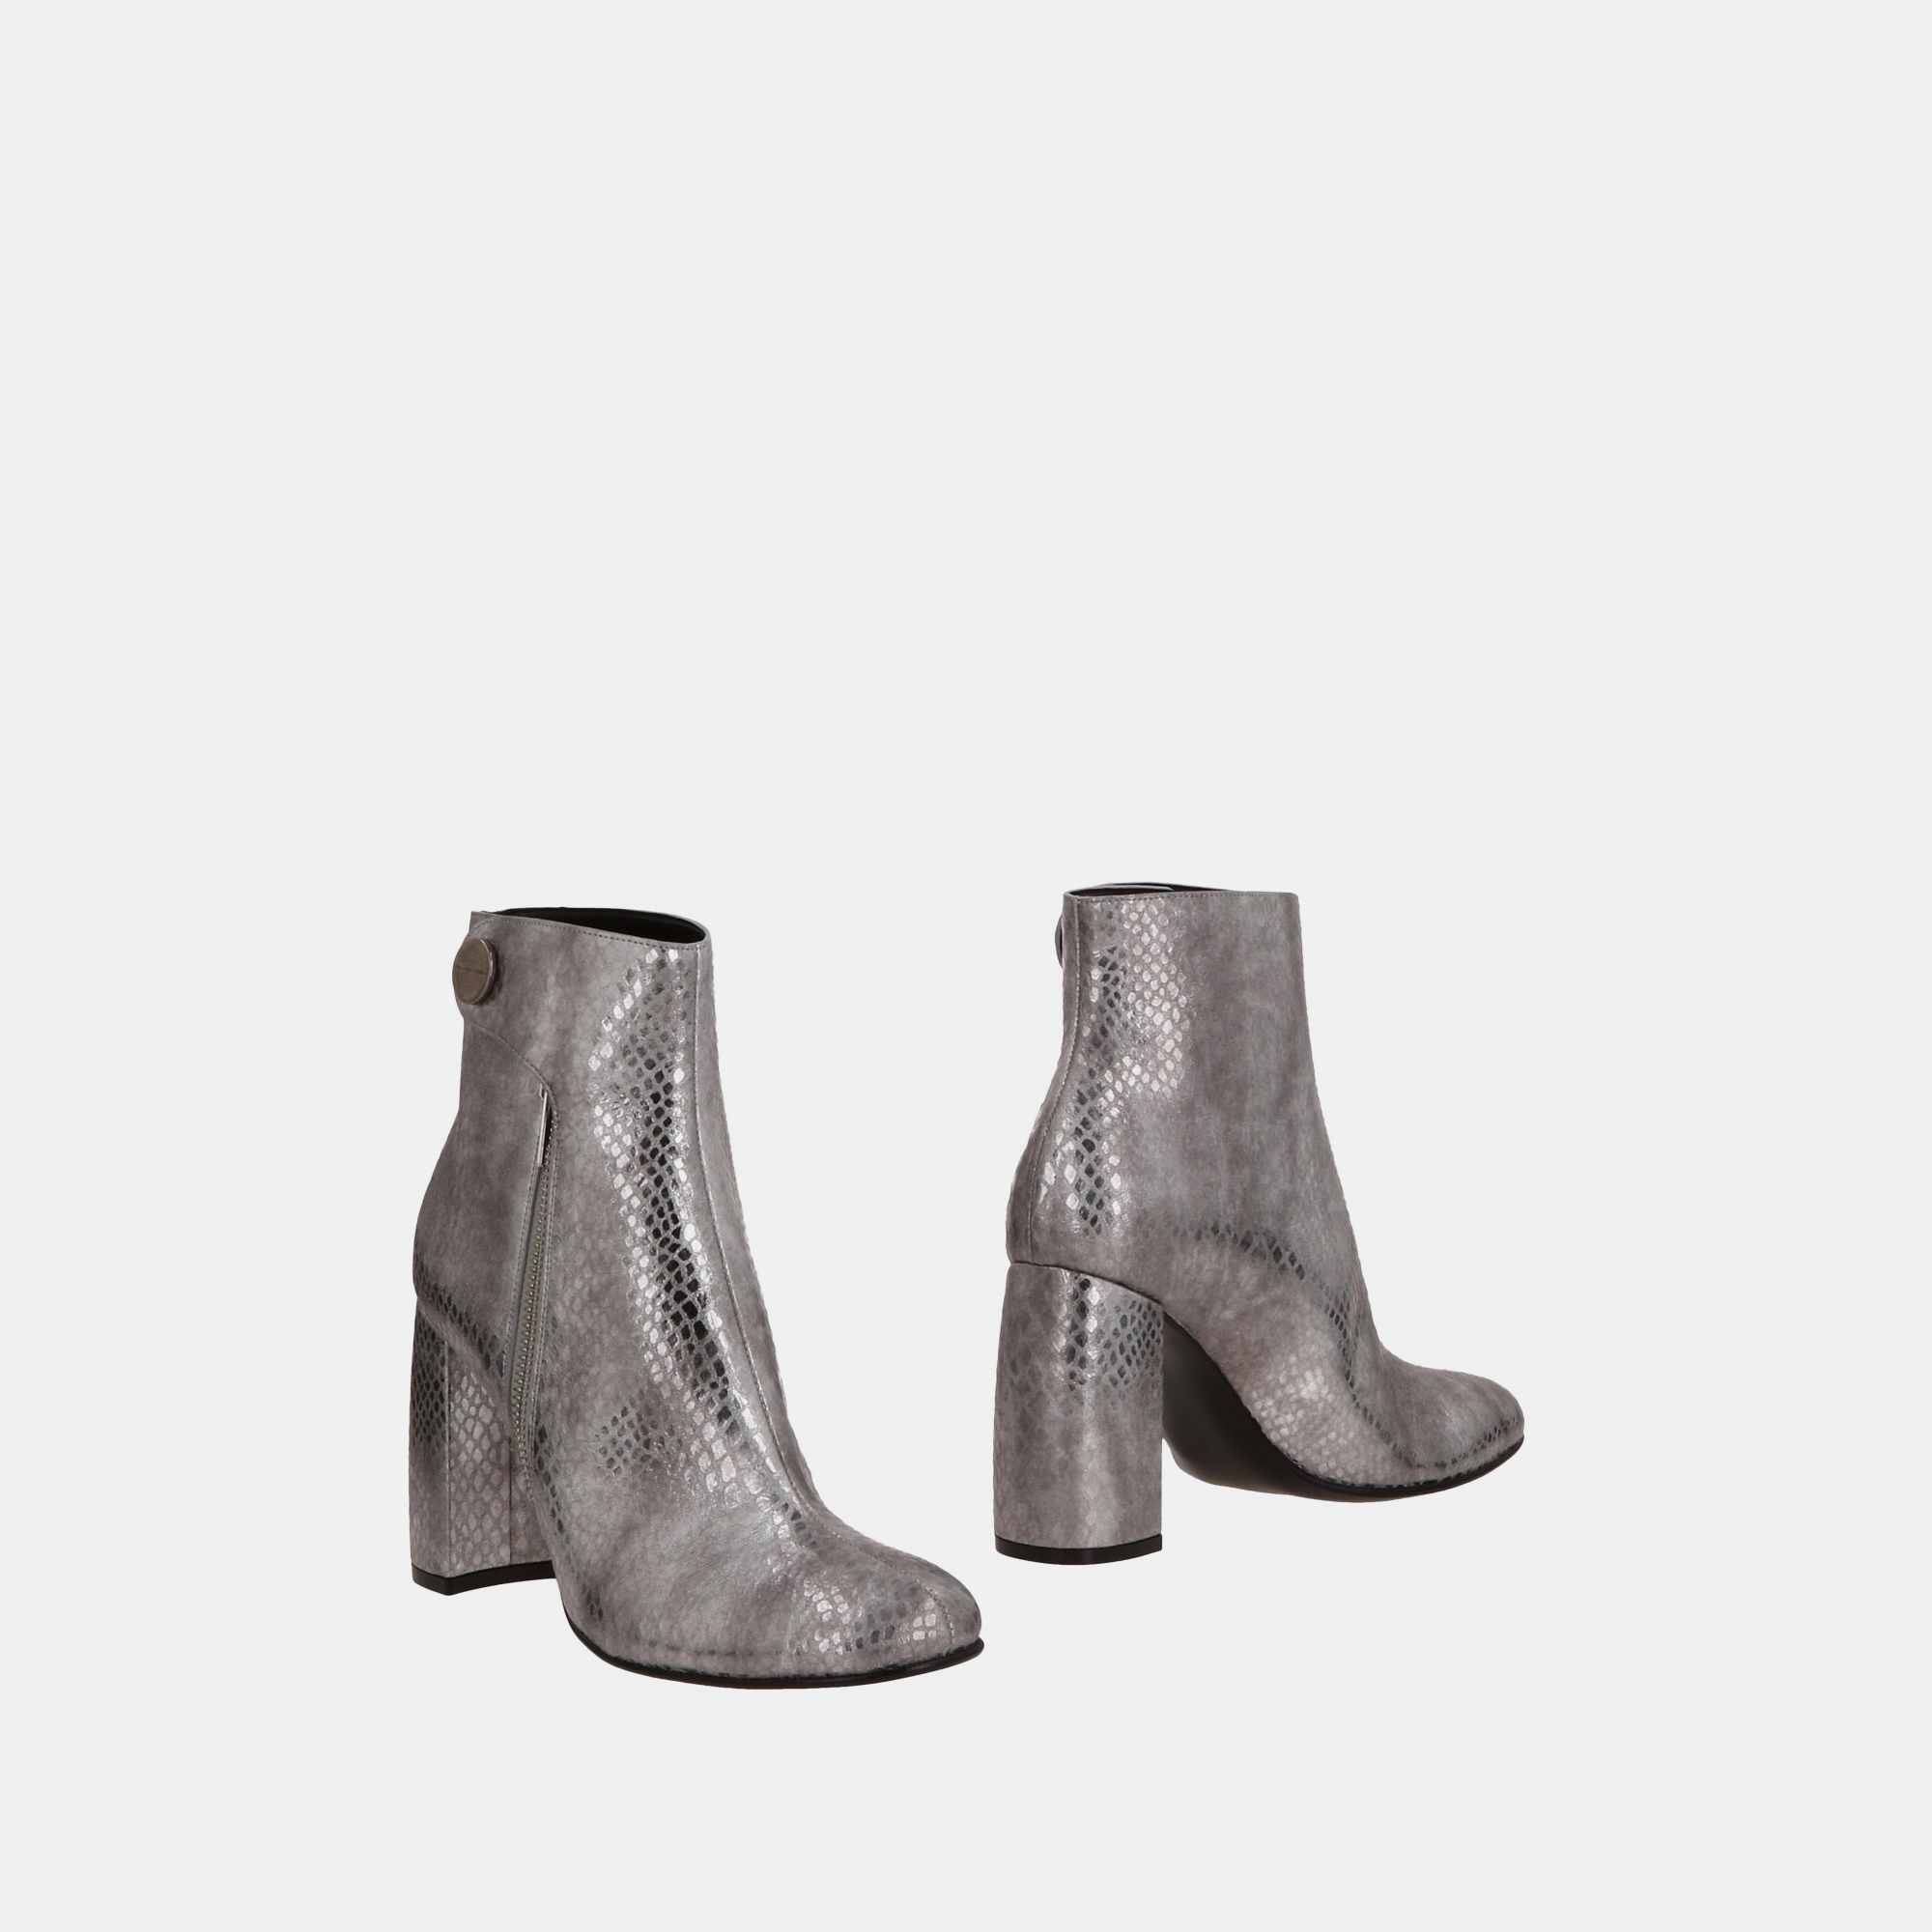 Stella mccartney snakeskin embossed leather block heel ankle boots size 37